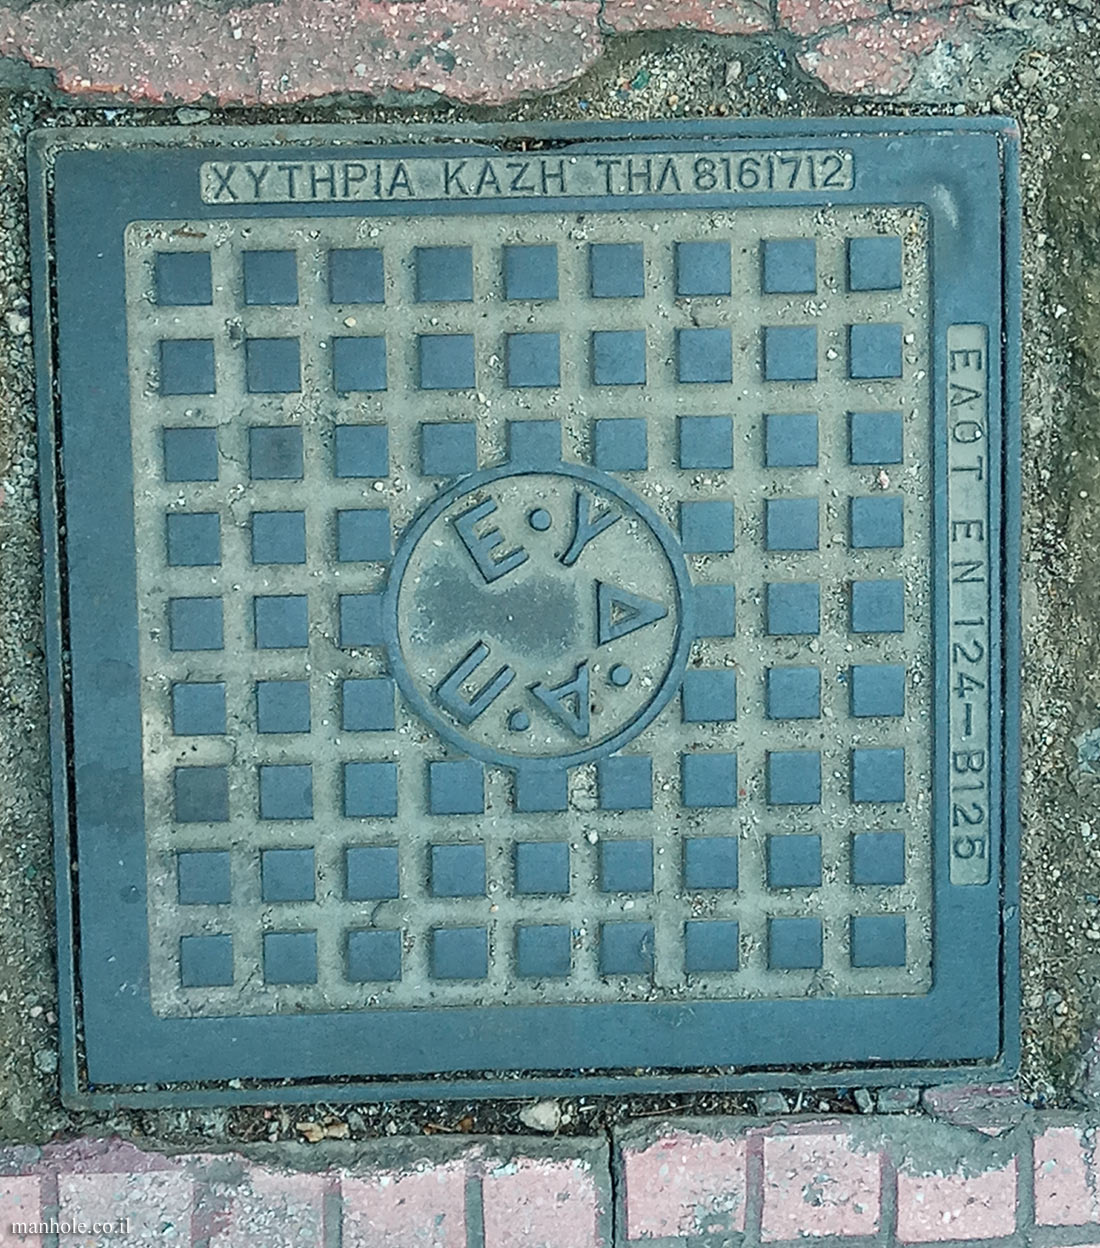 Athens - EYDAP - Sewer cap